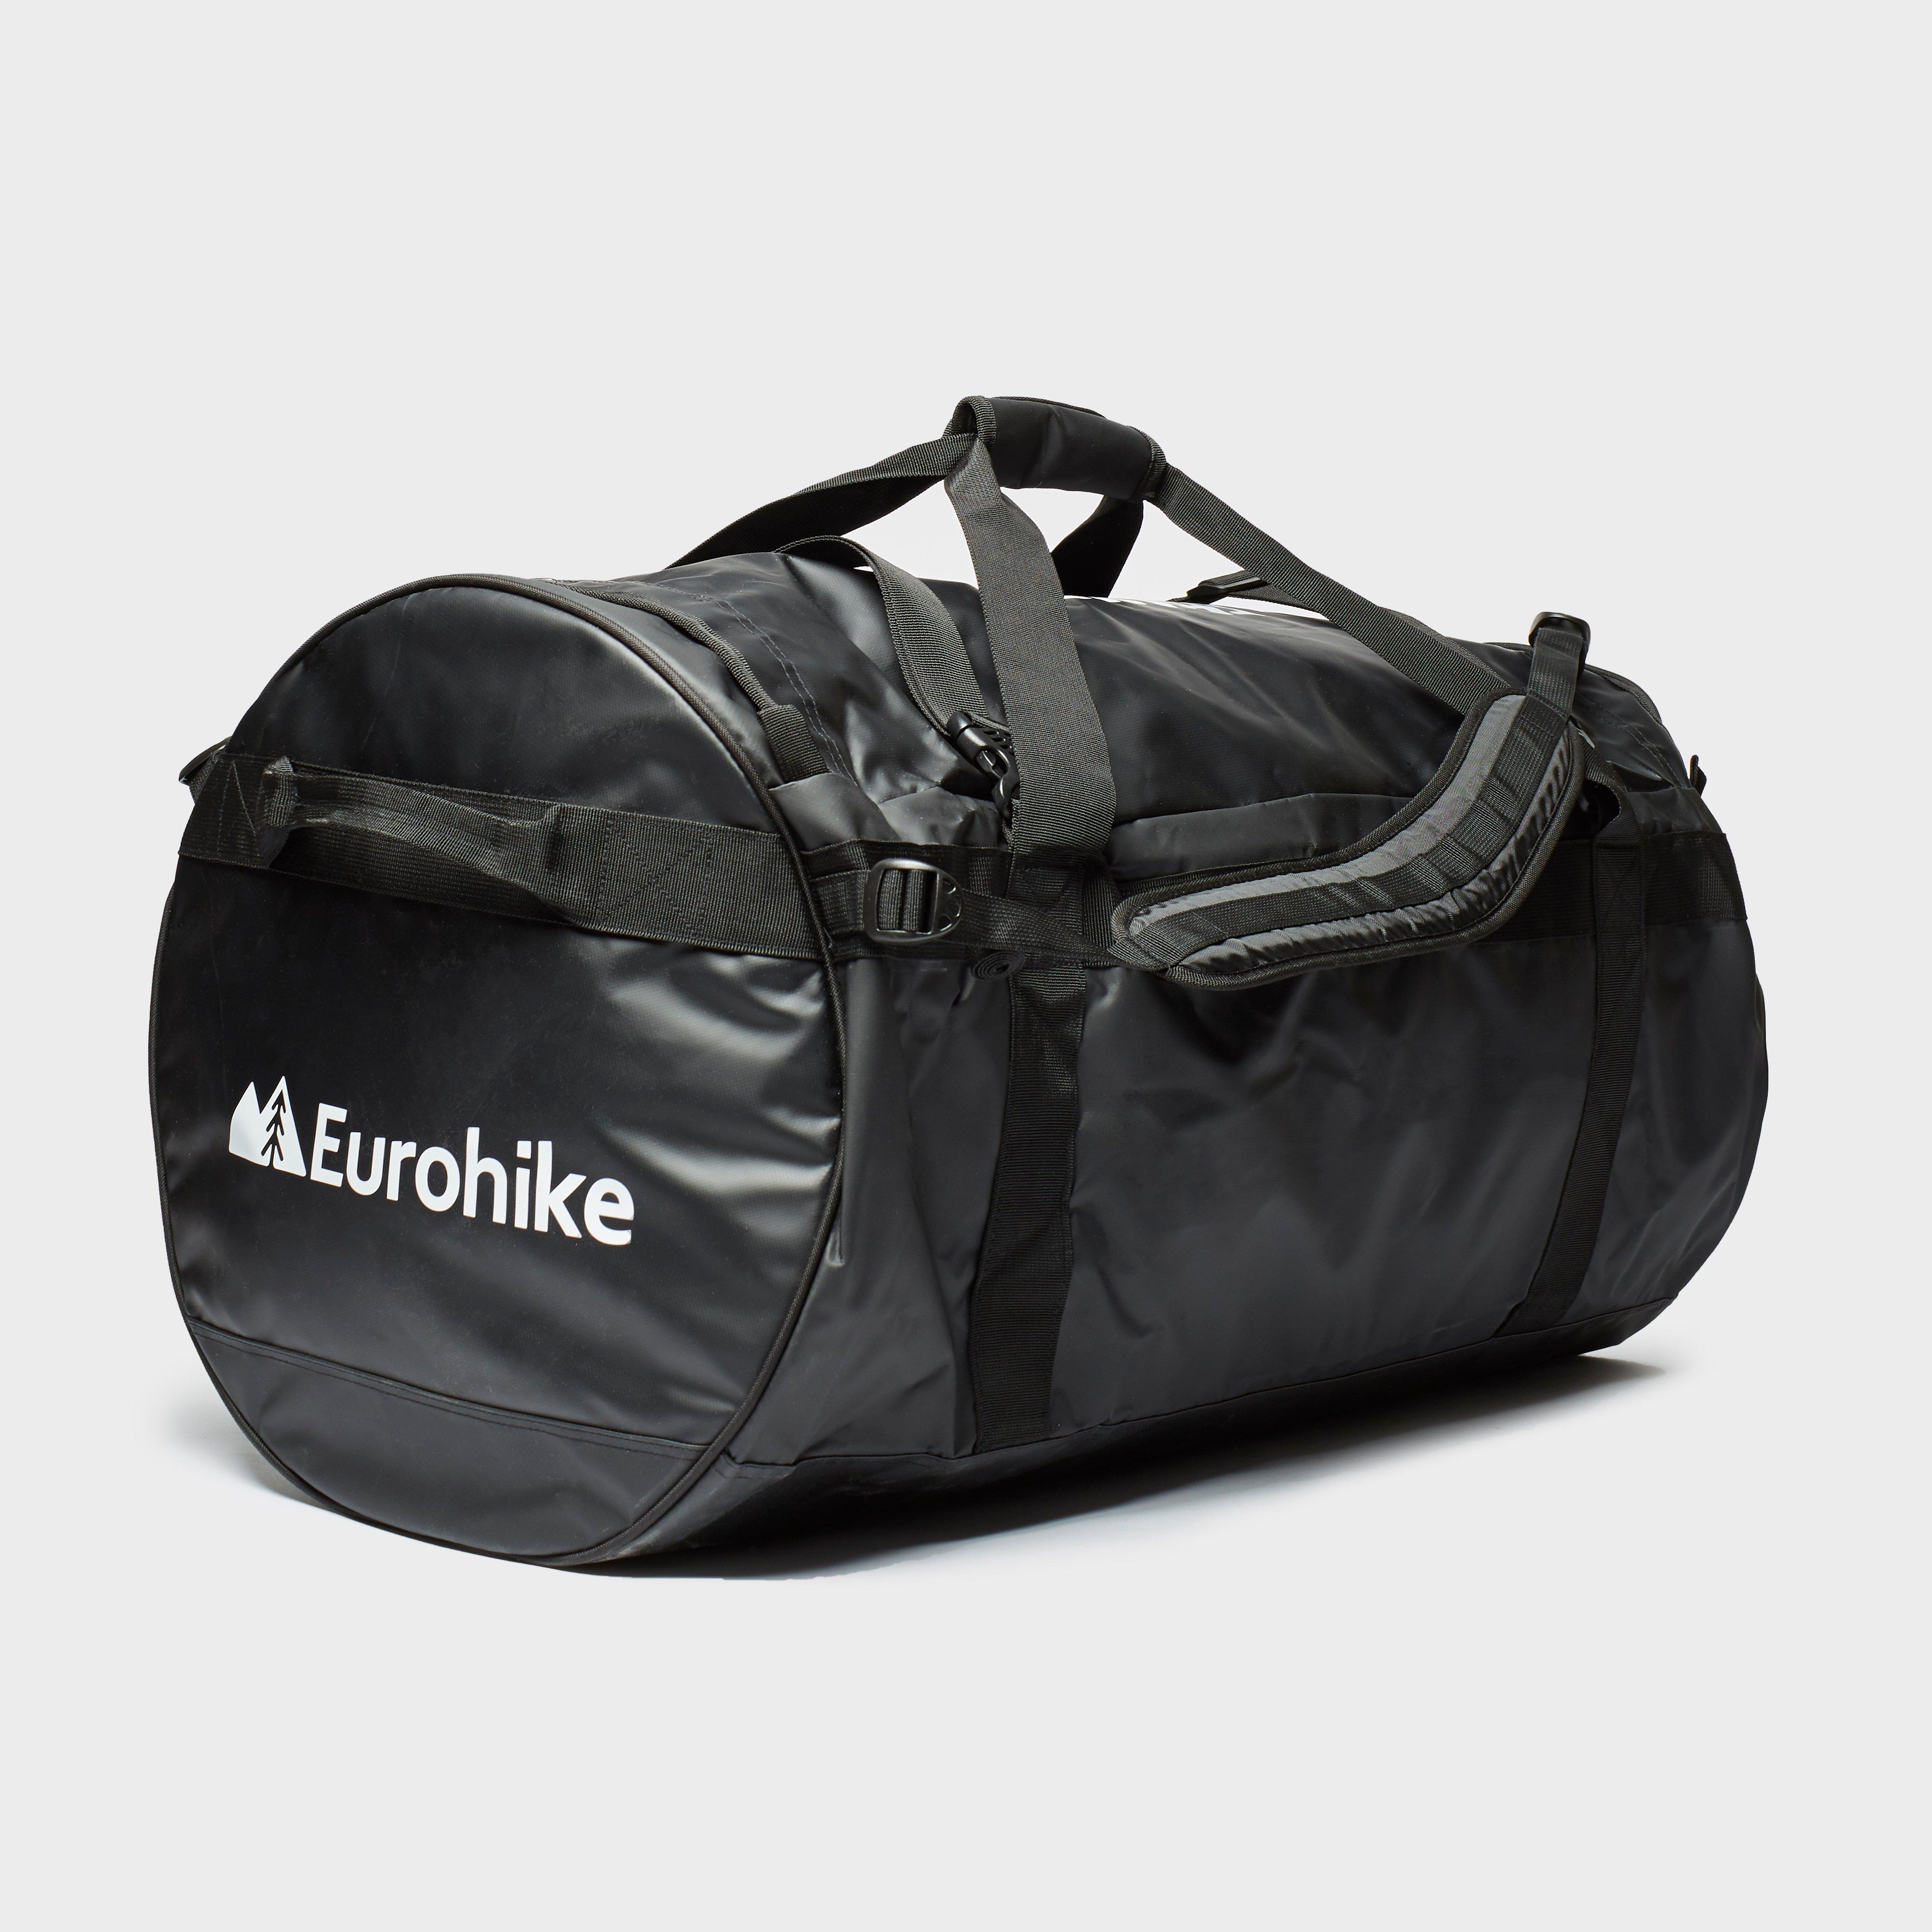 Eurohike Transit 120l Cargo Bag - Black/blk  Black/blk